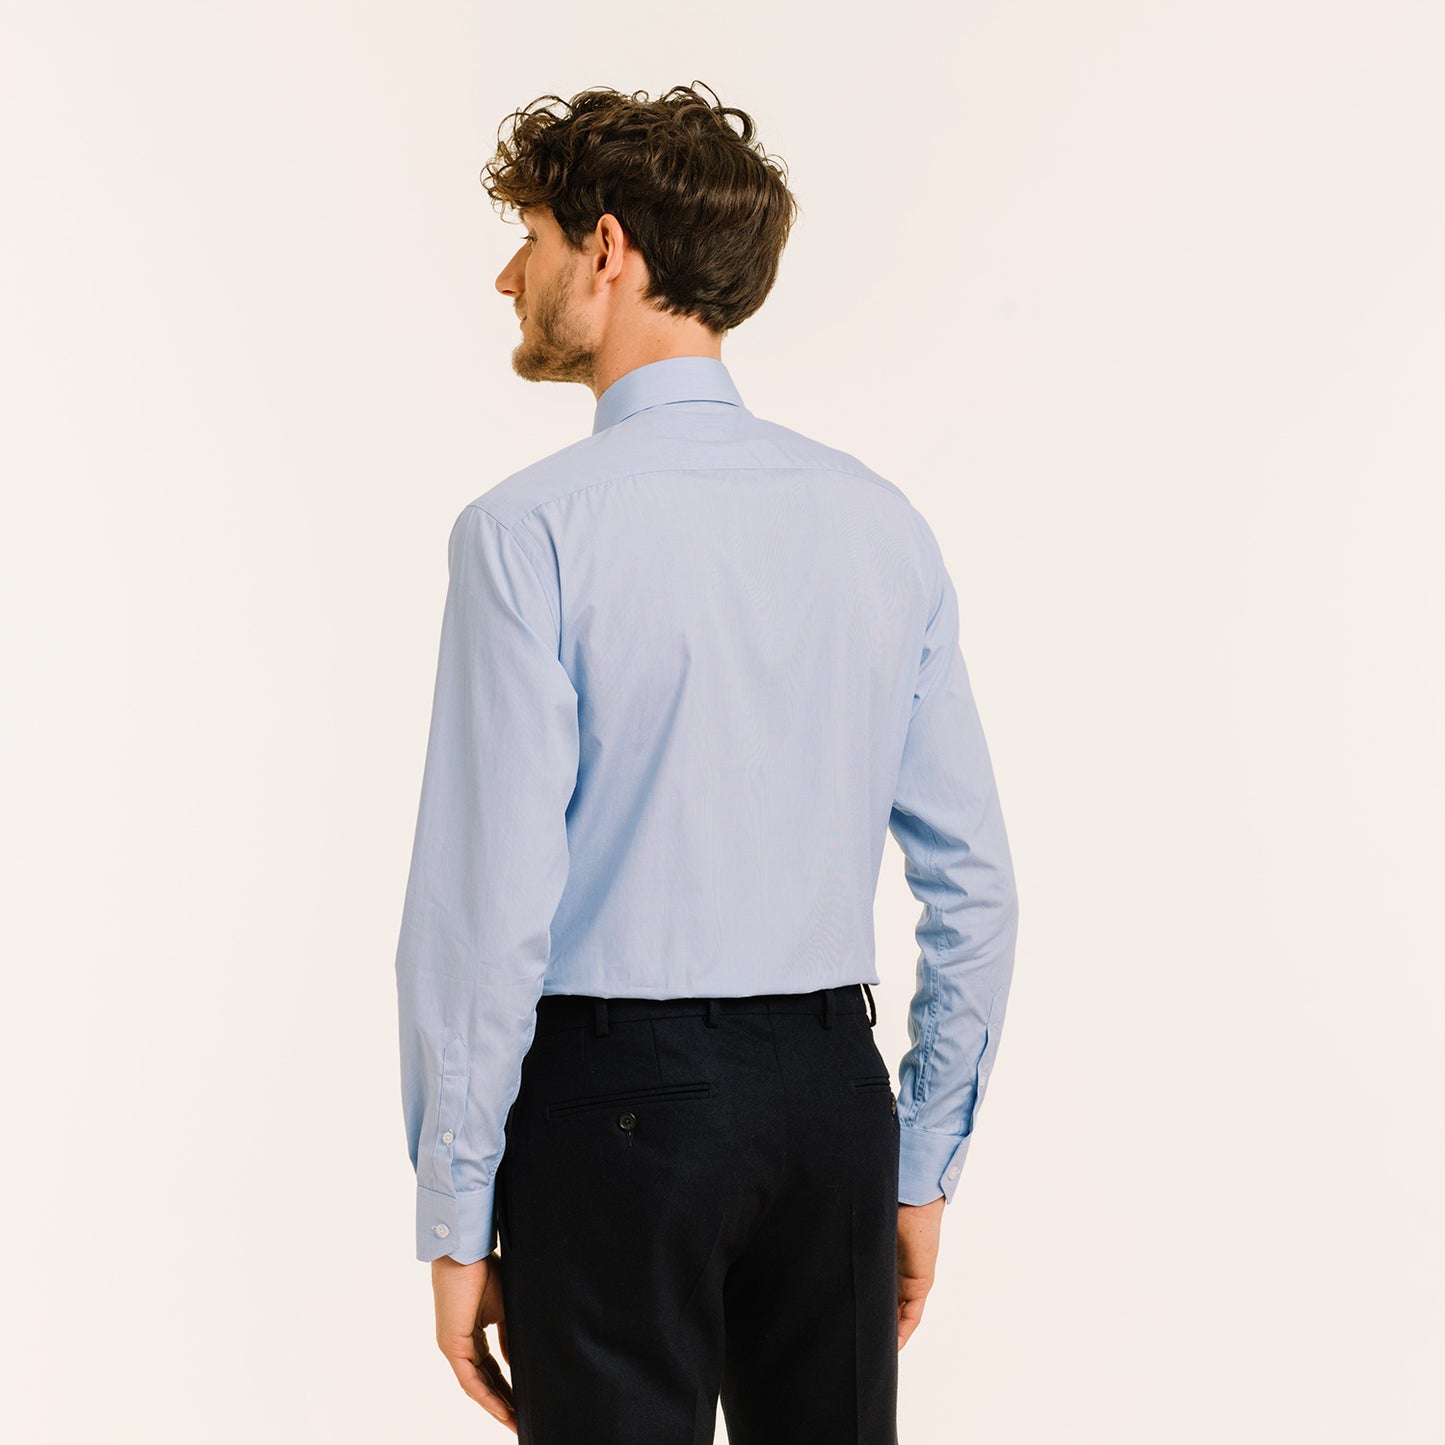 Faux-plain double-twisted poplin shirt with blue checks